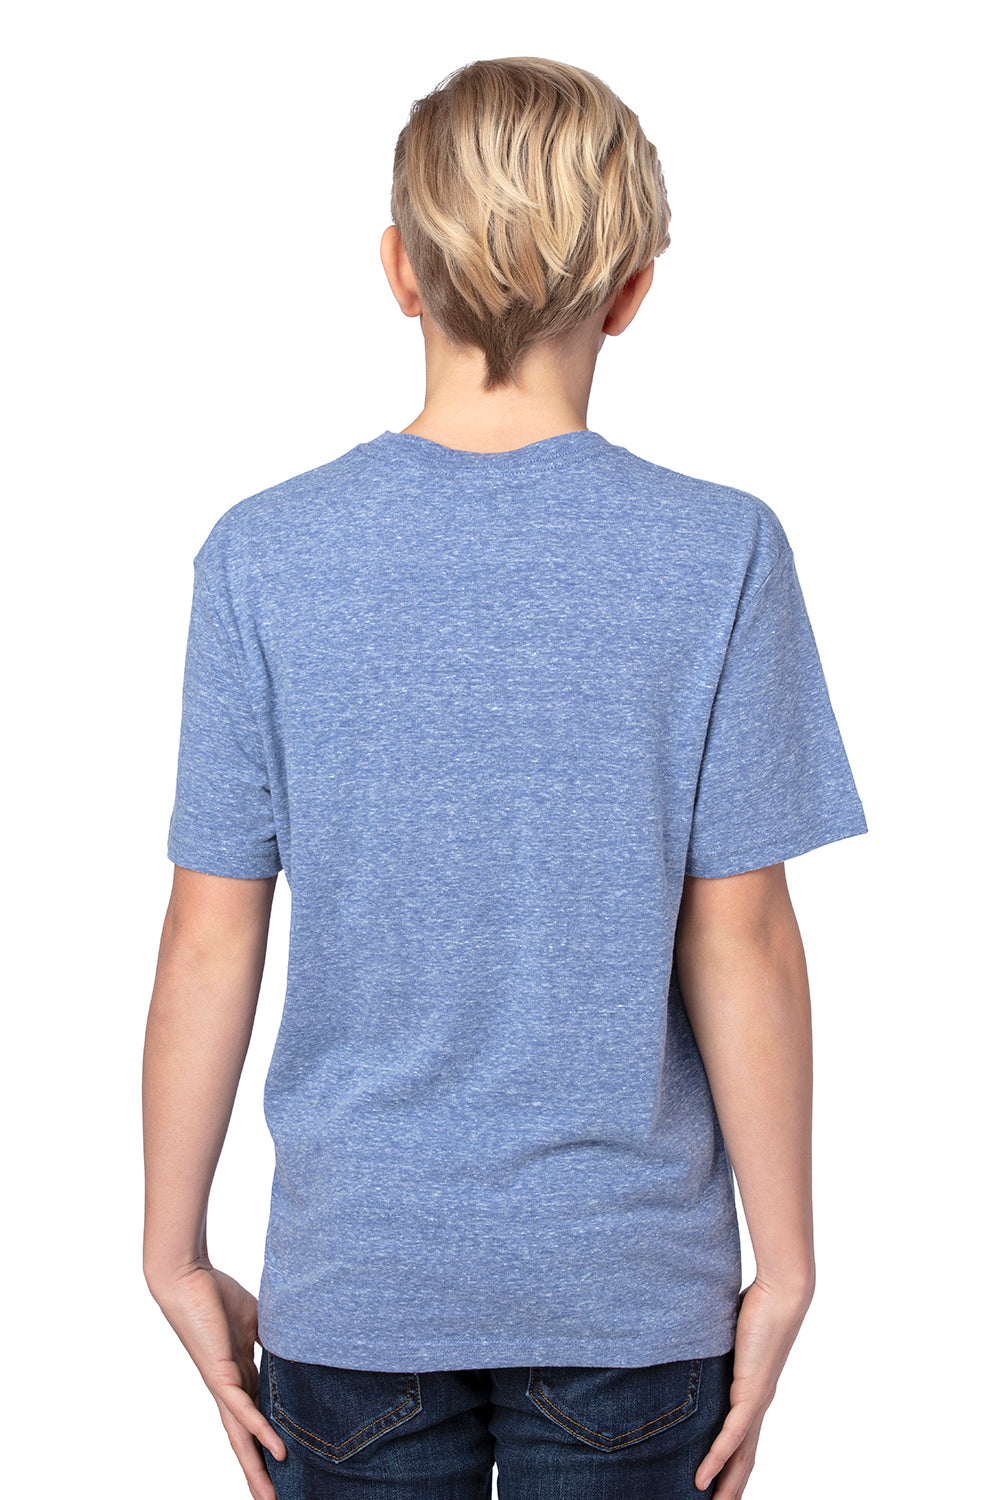 Threadfast Apparel 602A Youth Short Sleeve Crewneck T-Shirt Navy Blue Back